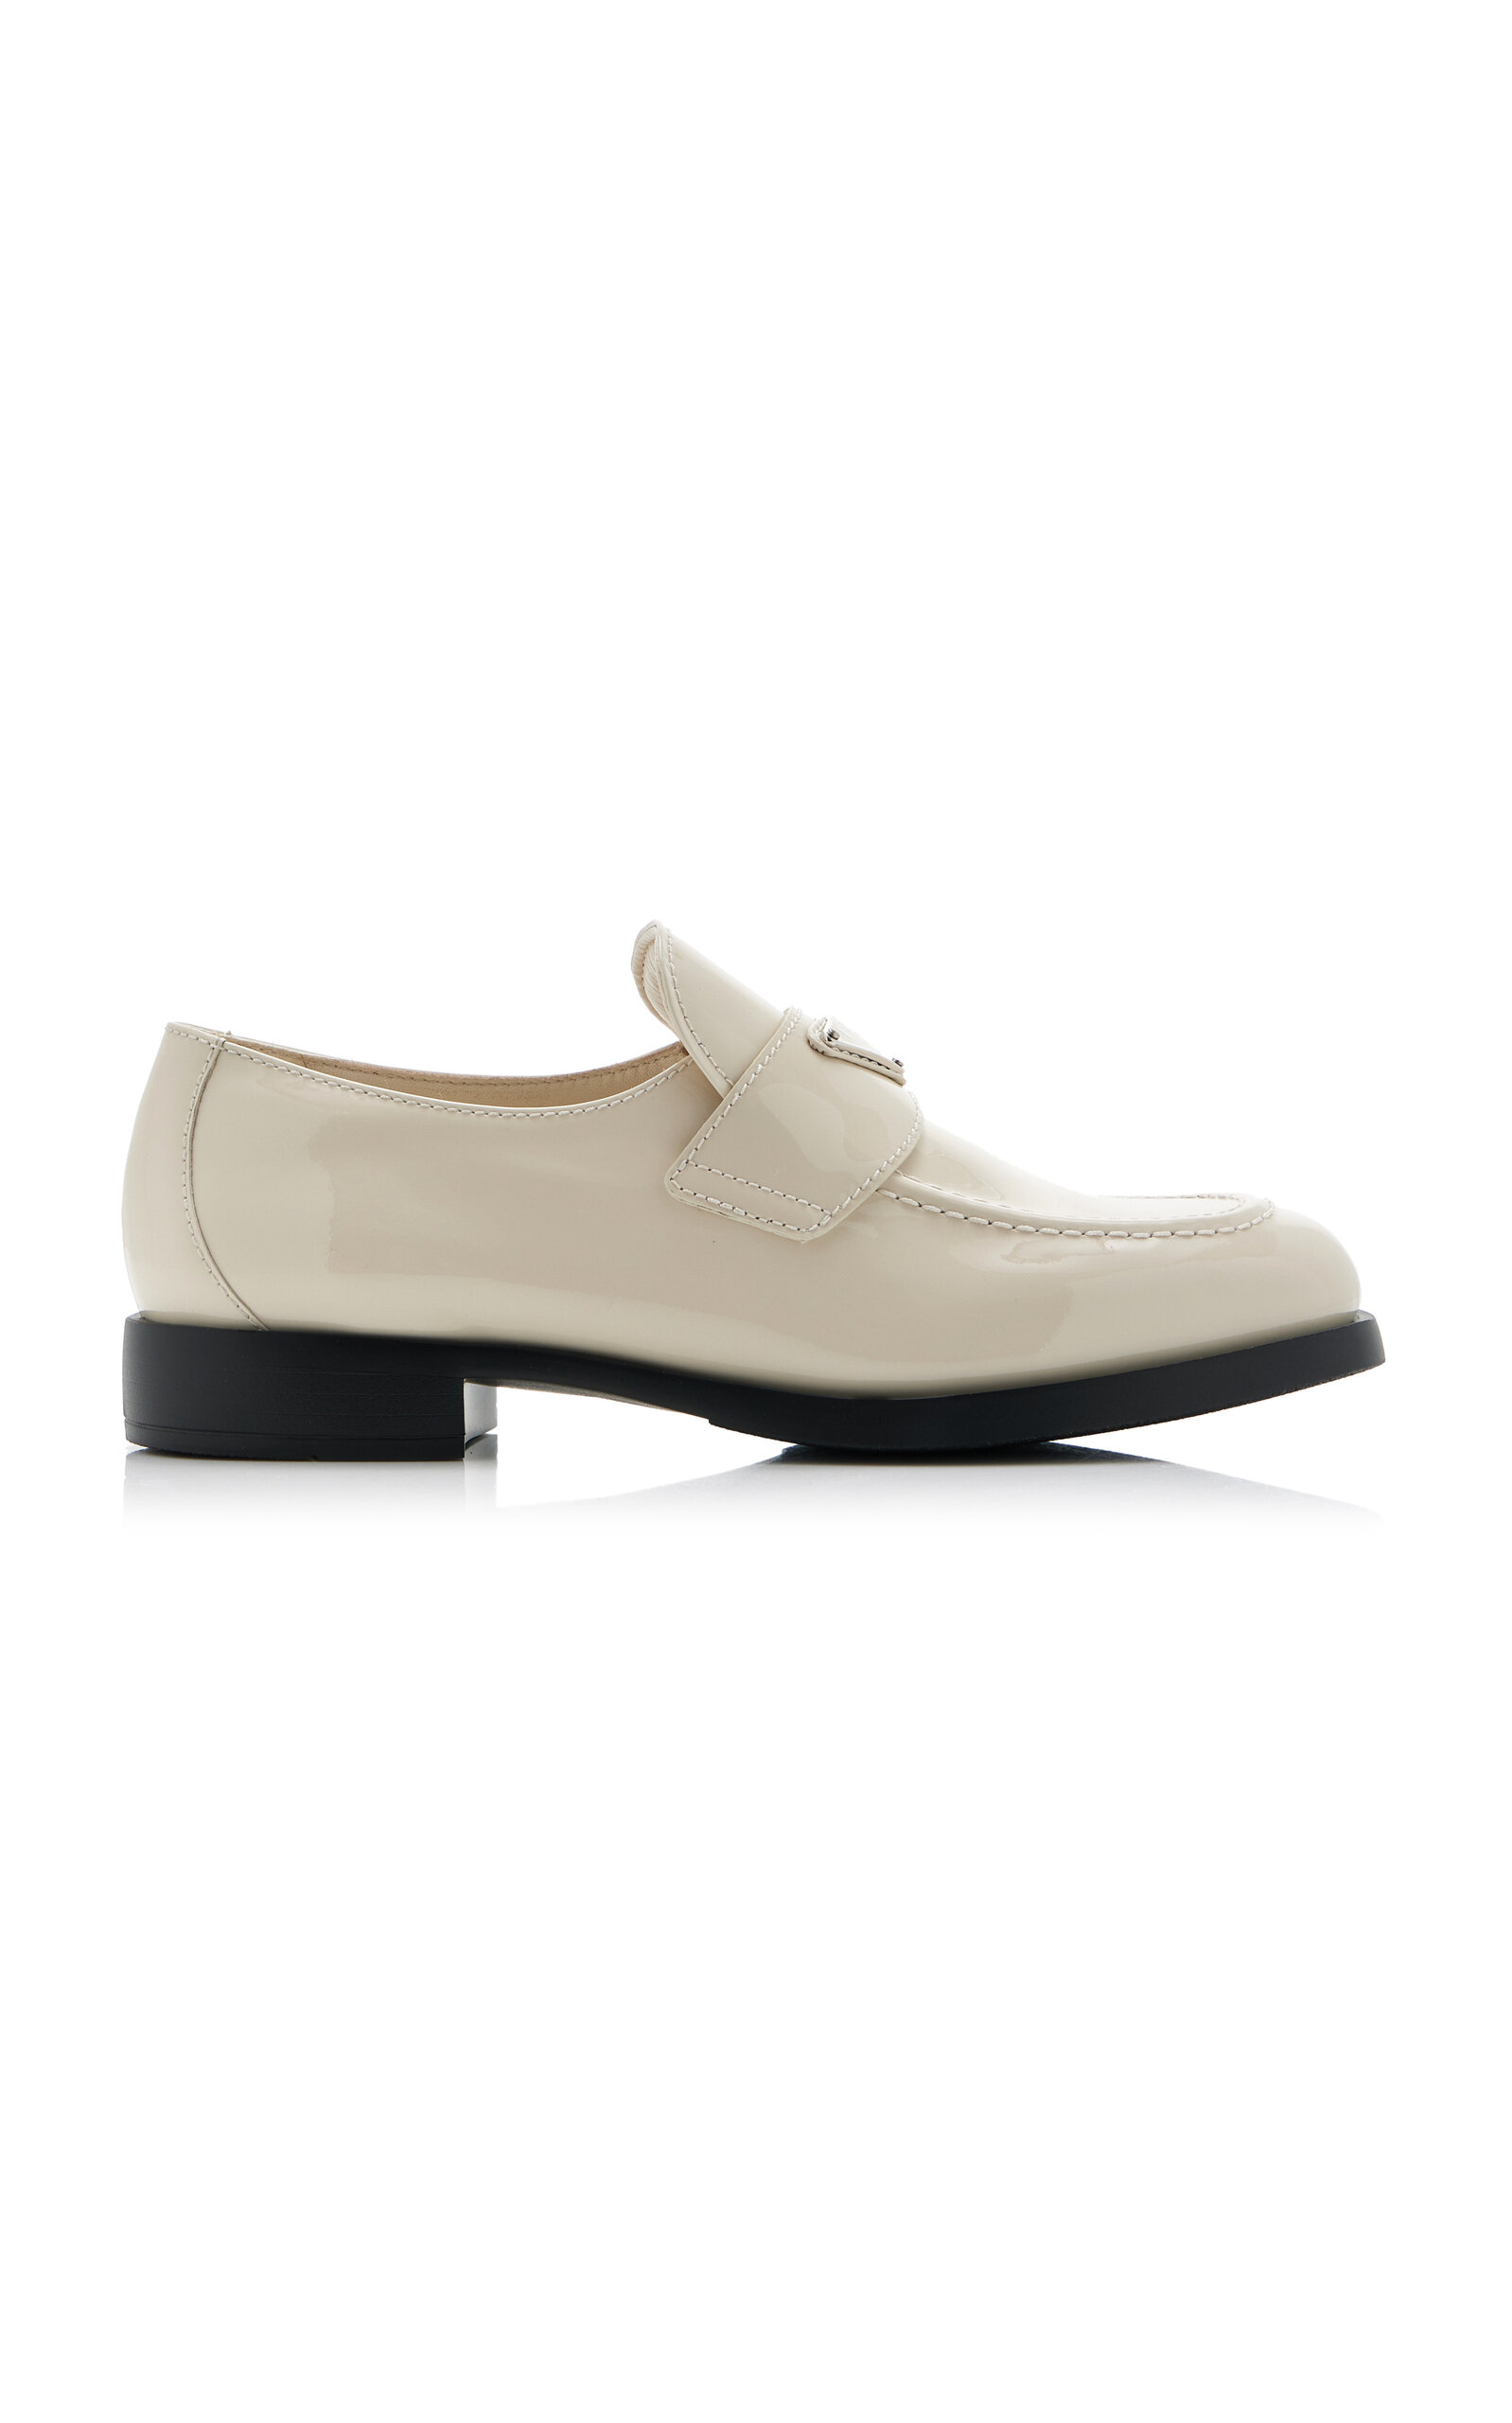 Prada - Patent Leather Loafers - Ivory - IT 39 - Moda Operandi